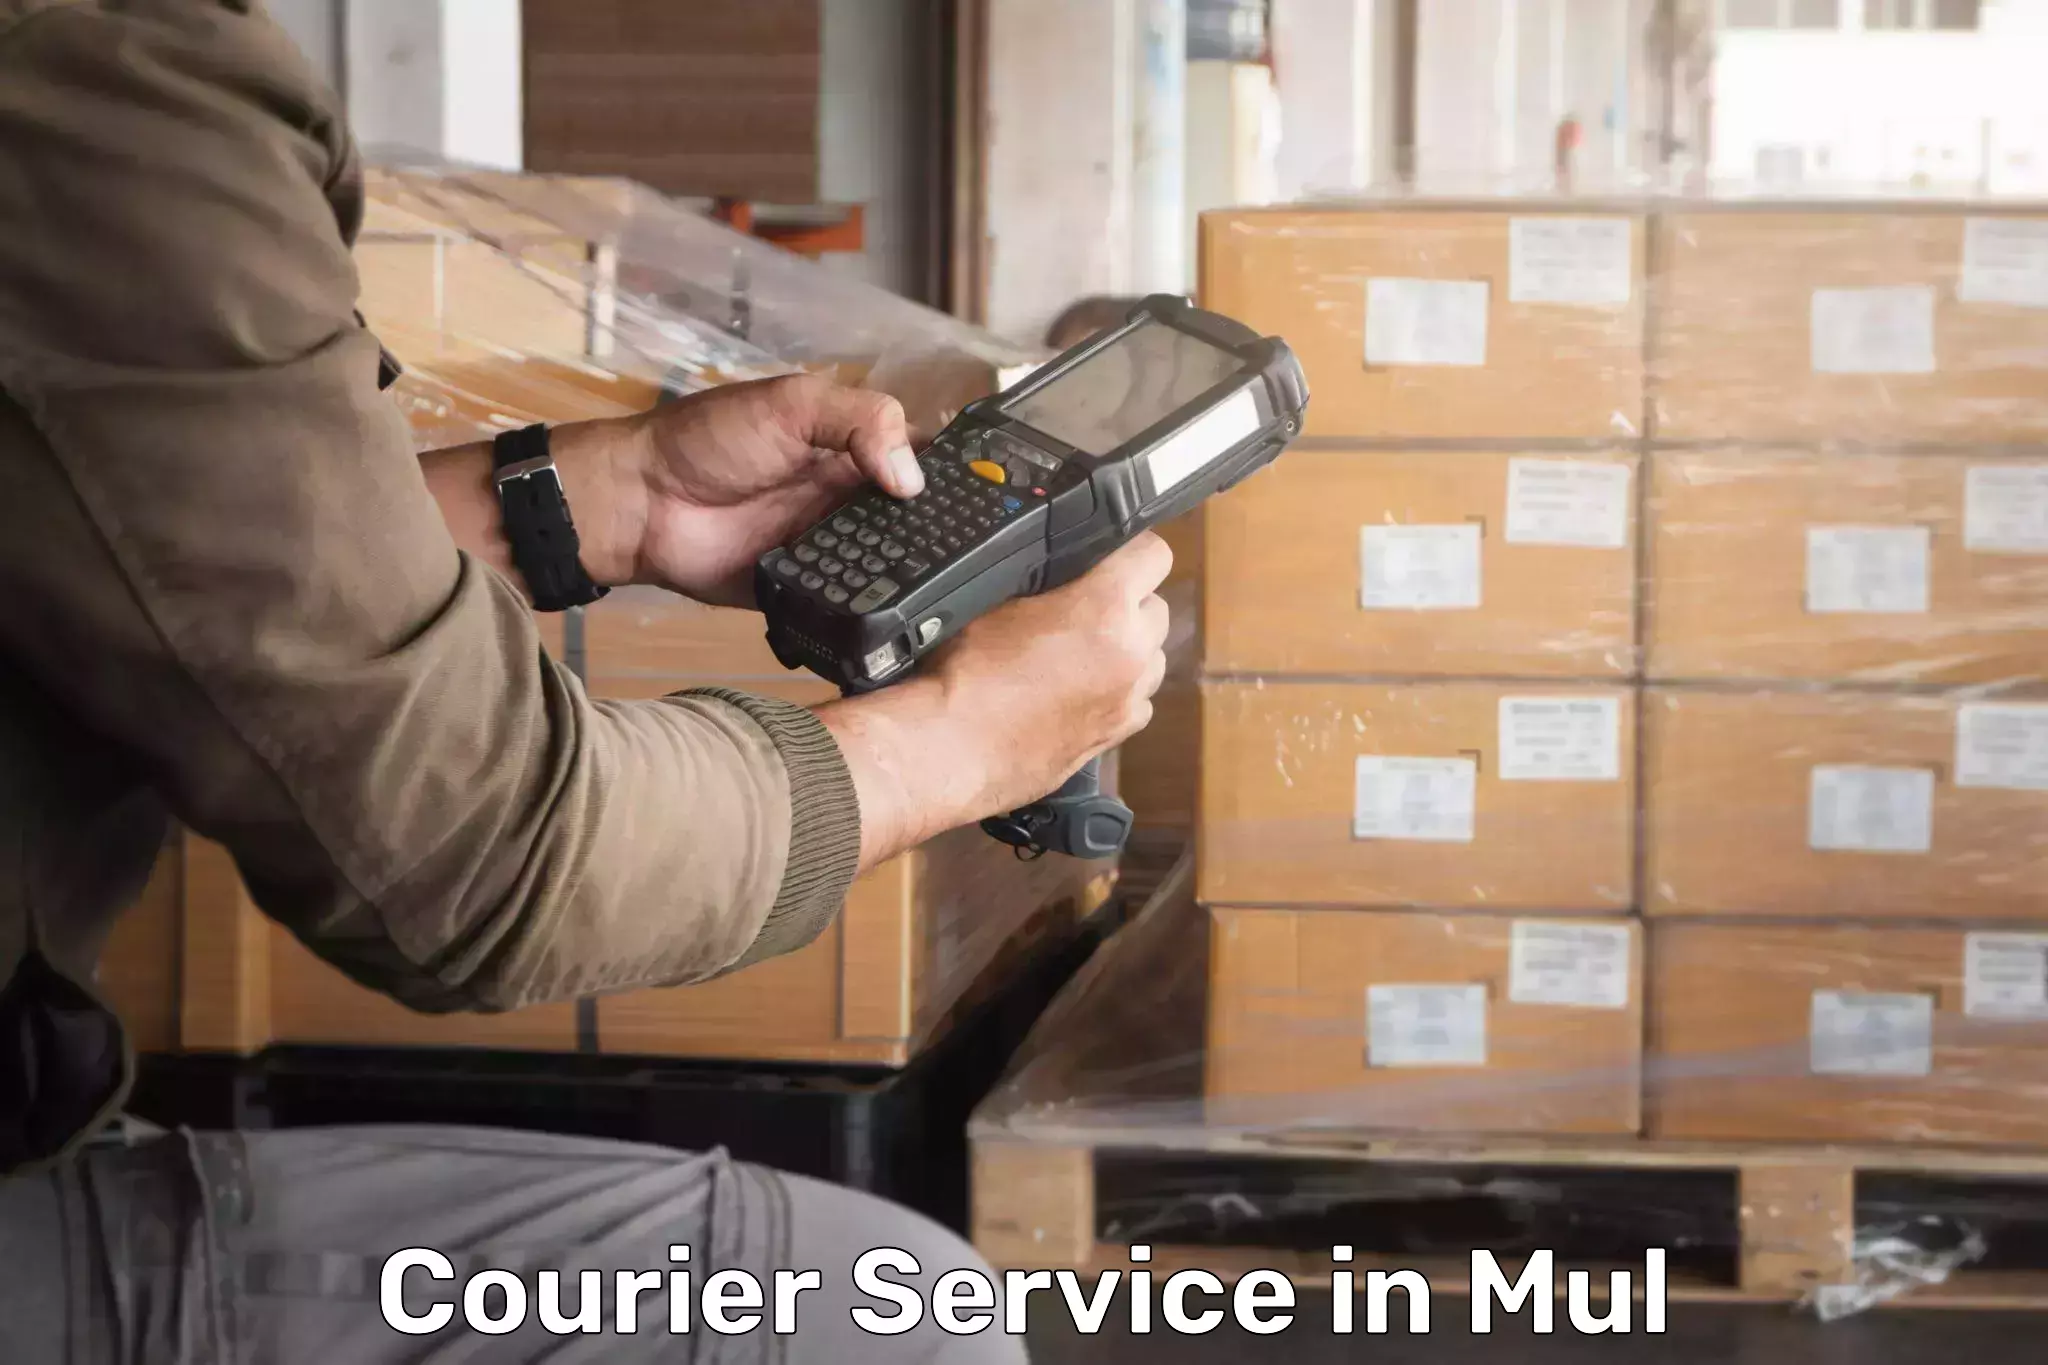 High-priority parcel service in Mul